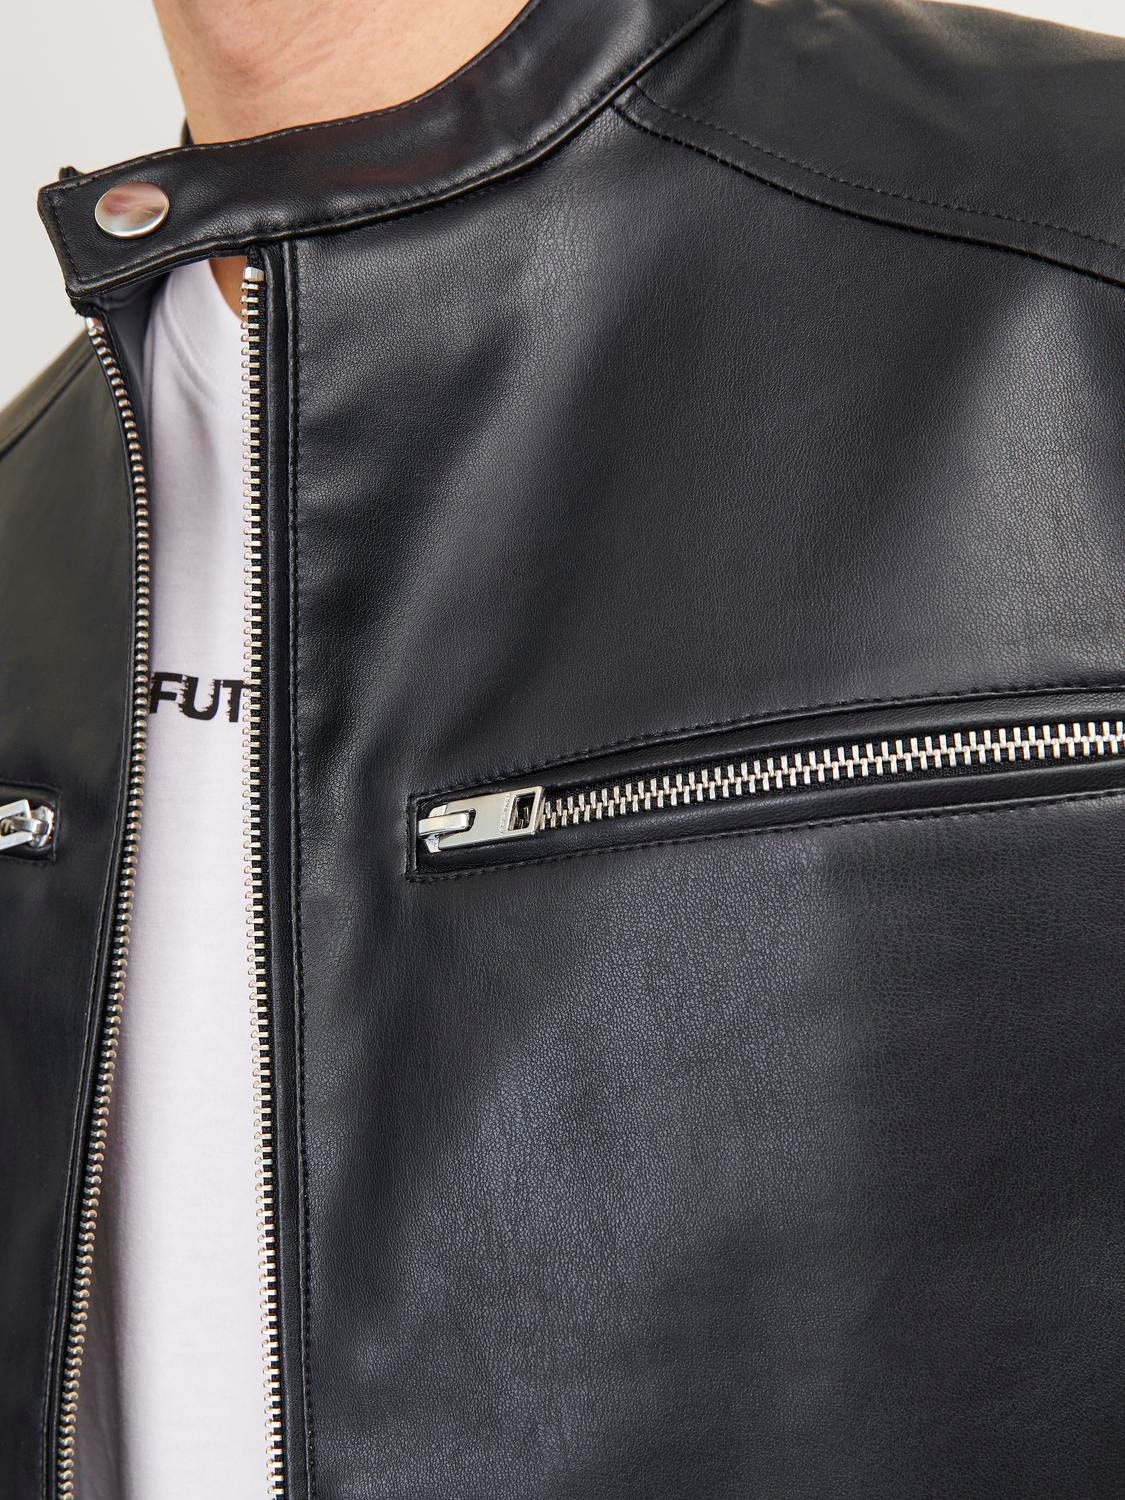 Jack & Jones Faux leather jacket -Black - 12255751